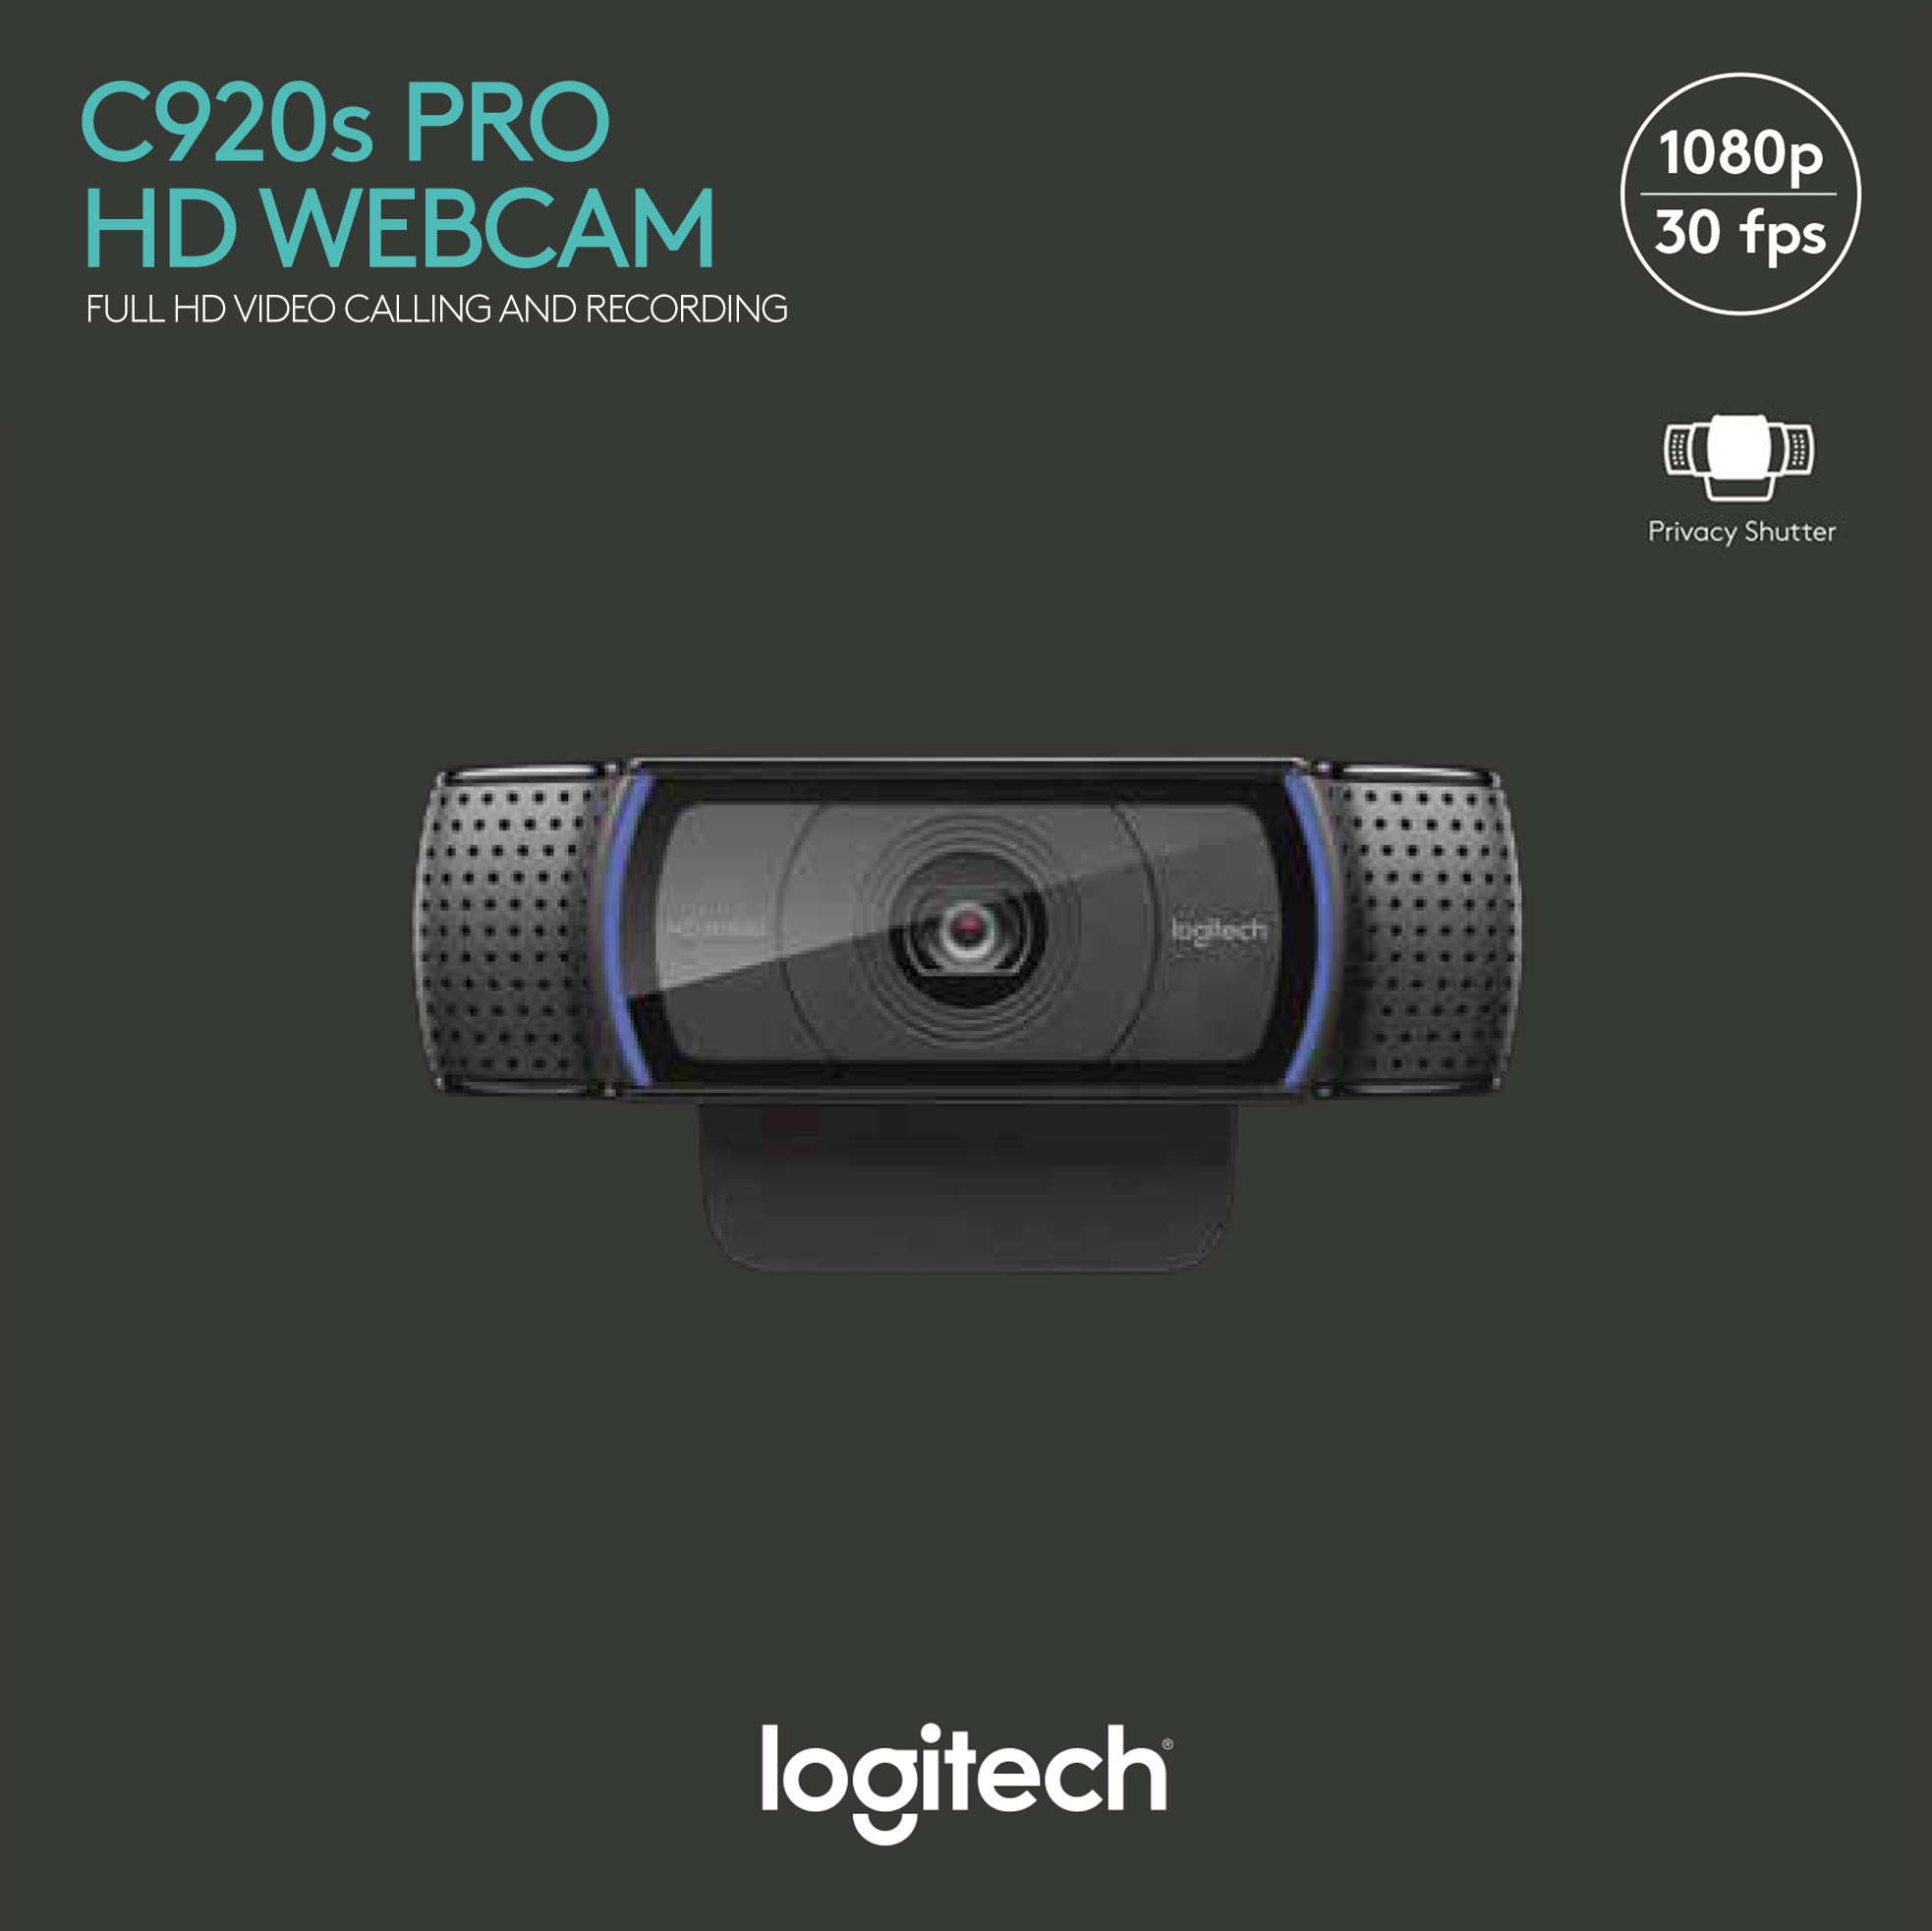 Logitech Webcam C920s Pro, Full HD 1080p, schwarz 1920x1080, 30 FPS, USB, Privacy Shutter, Retail